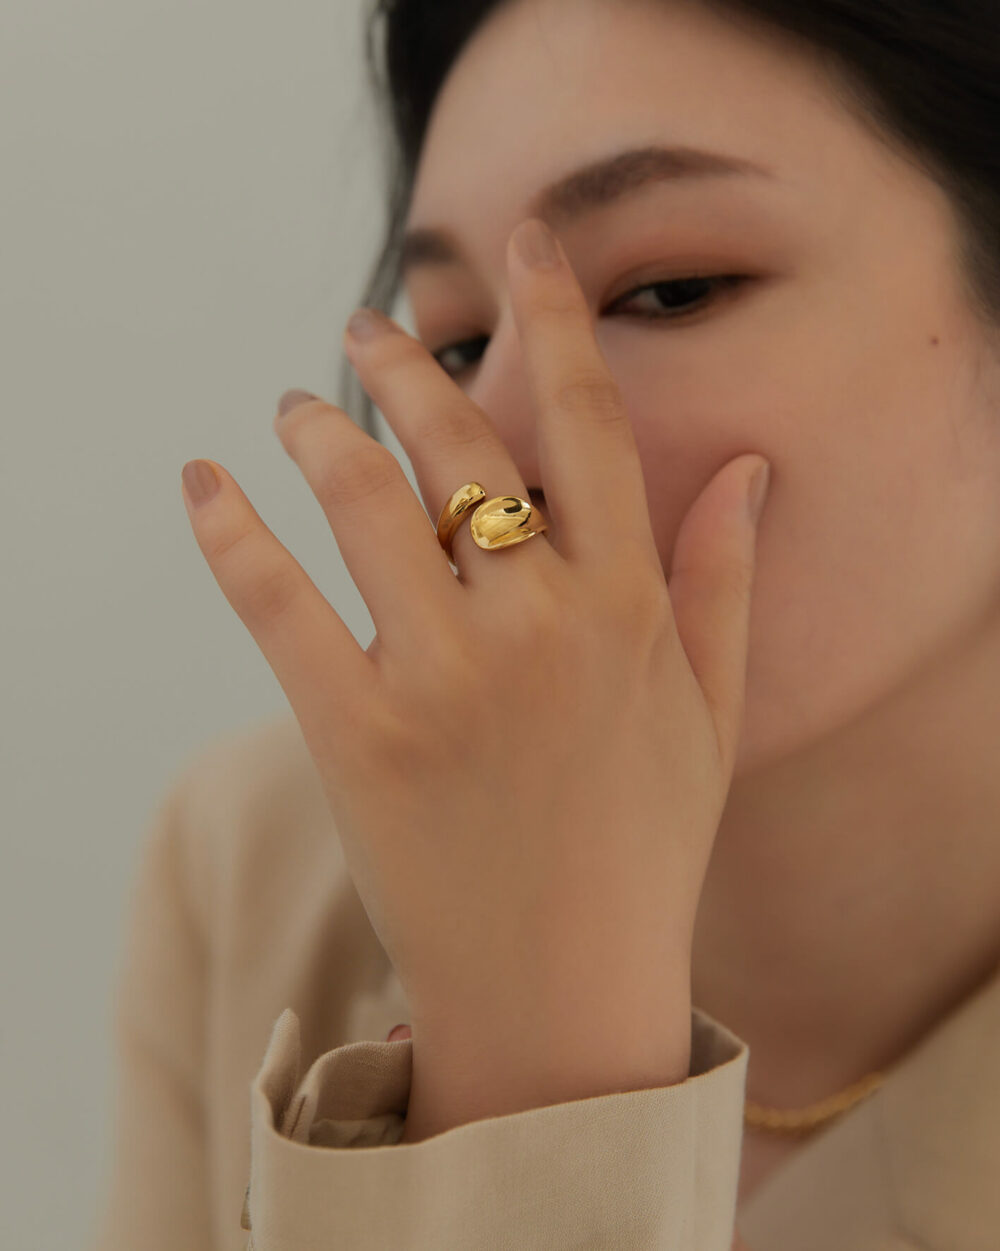 Eco安珂,韓國飾品,韓國戒指,醫療鋼戒指,個性戒指,寬版戒